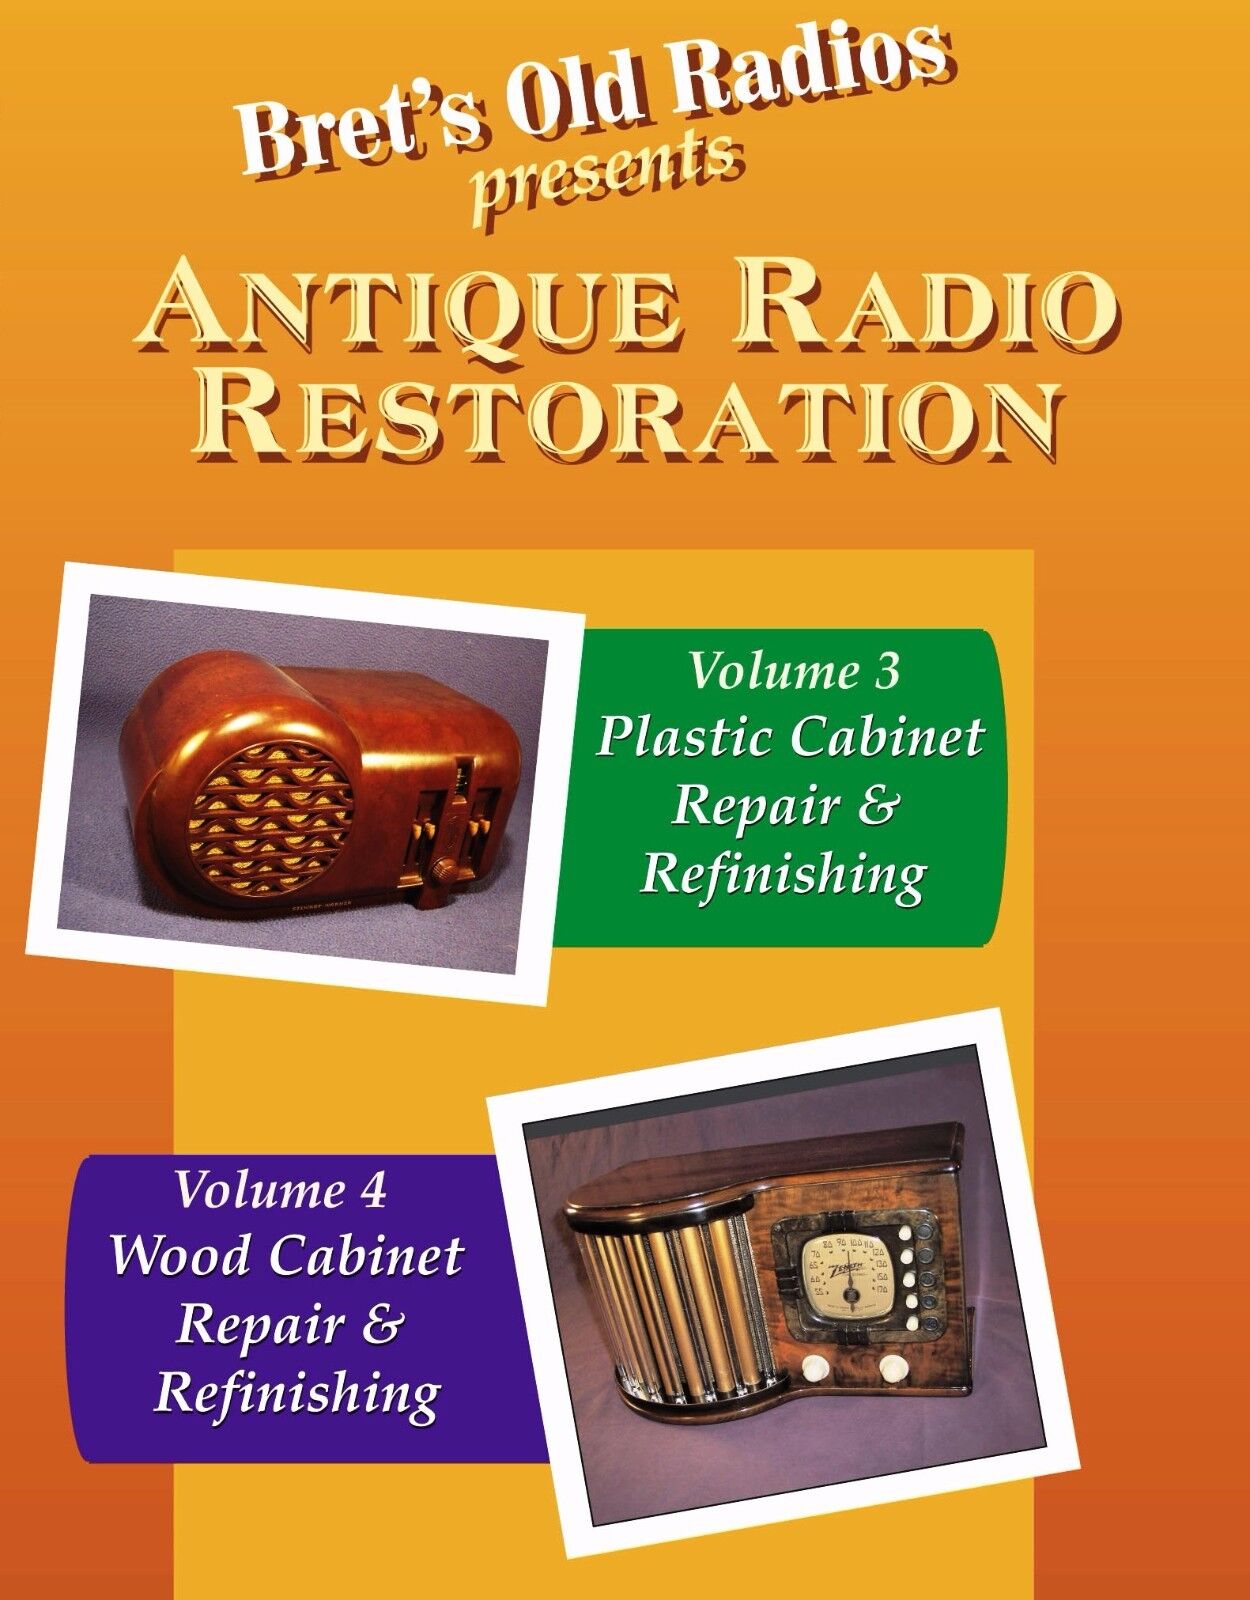 Antique Radio Restoration Vols 3 & 4 - Wood & Plastic Cabinets  **NOW 25% OFF**